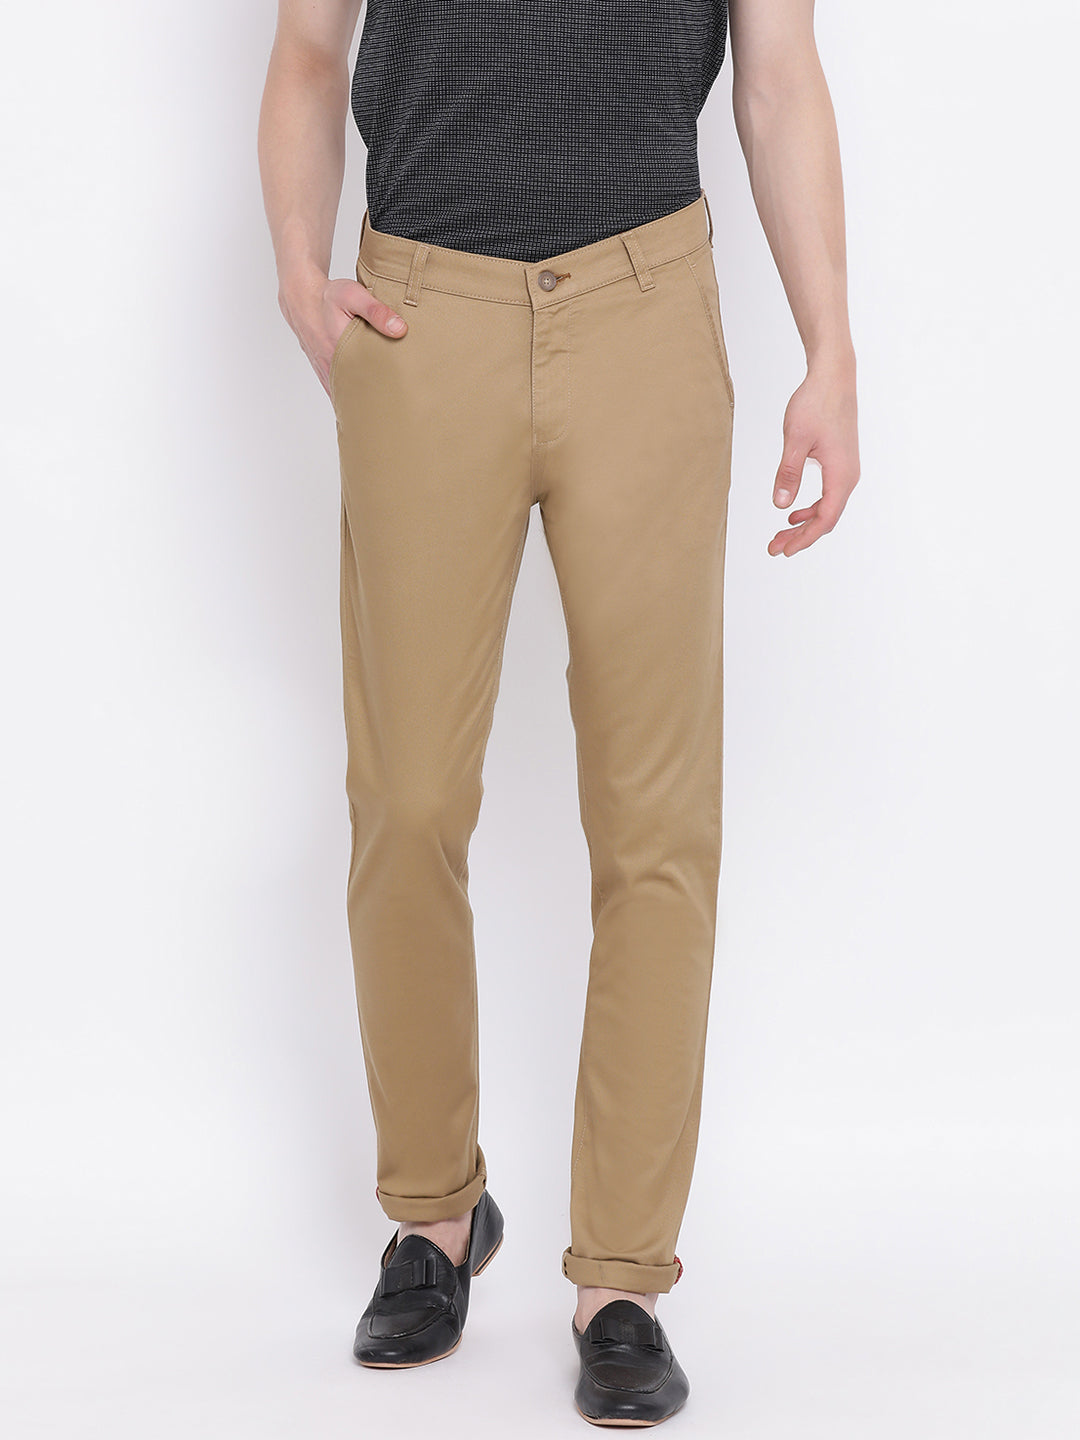 Brown Slim Fit Trousers - Men Trousers